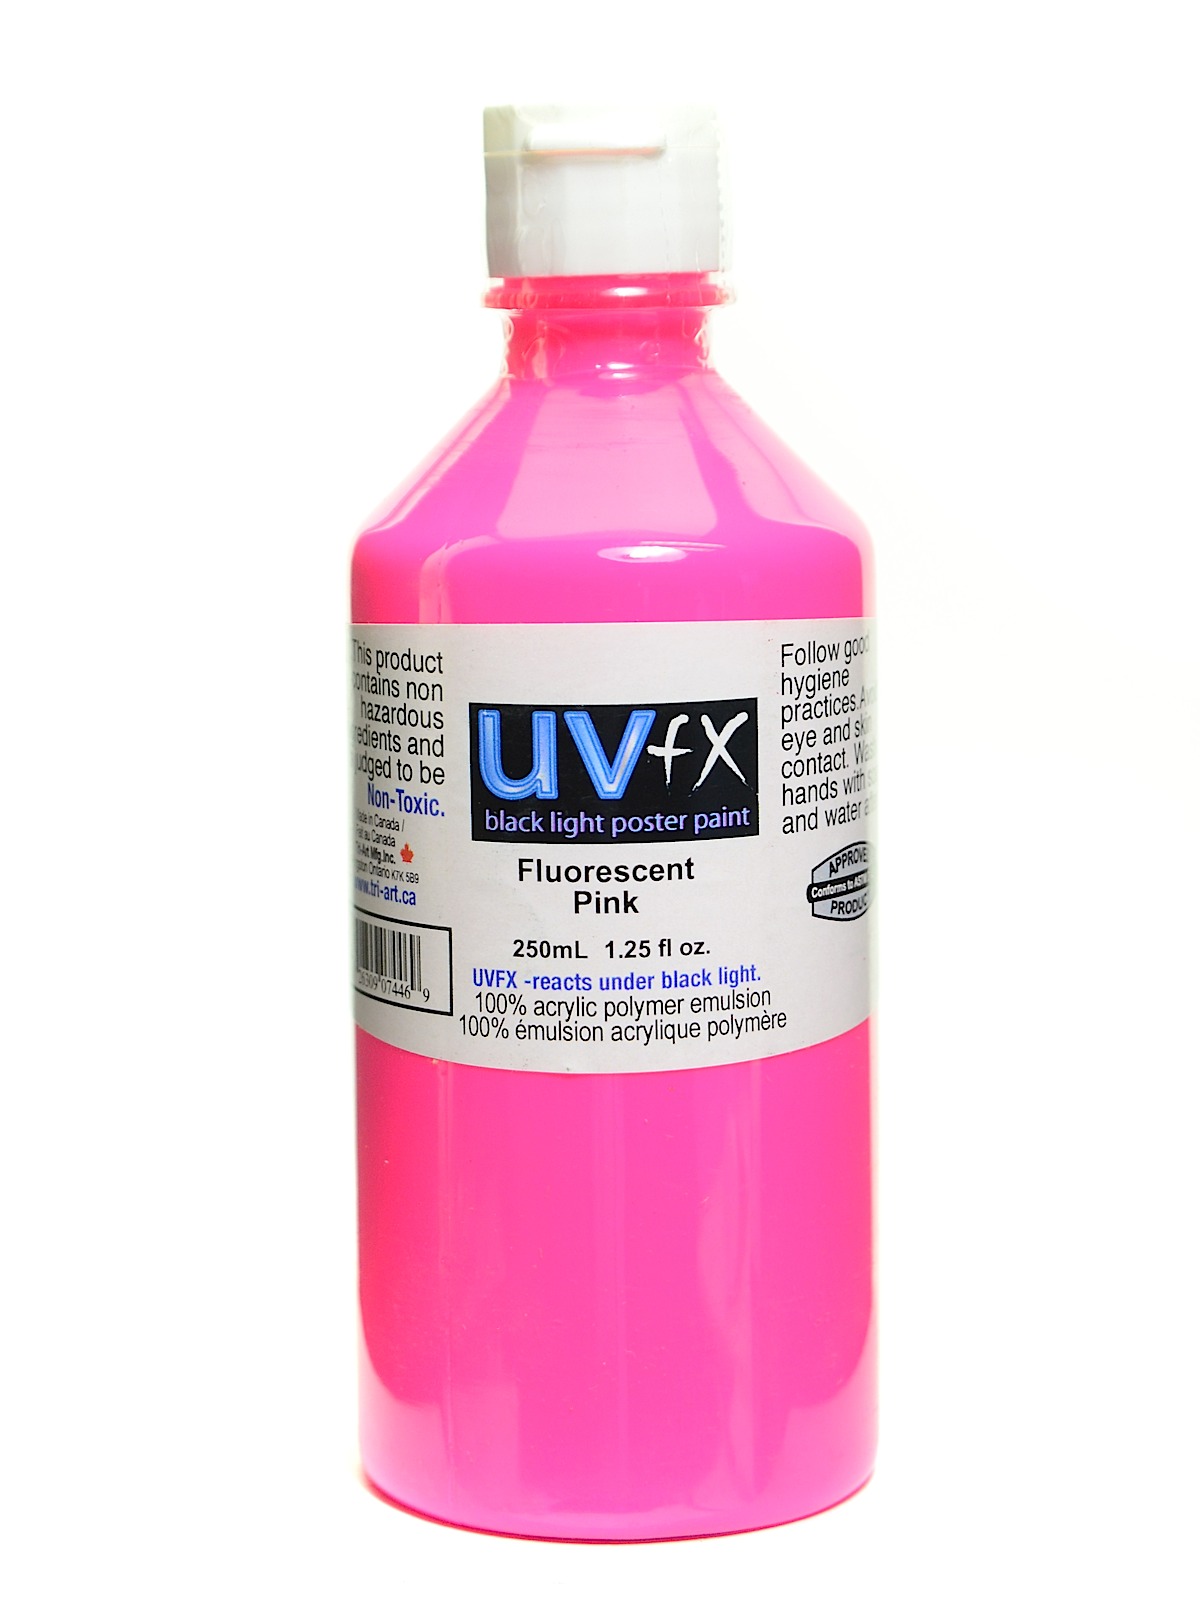 Uvfx Black Light Poster Paint Fluorescent Pink 250 Ml Bottle